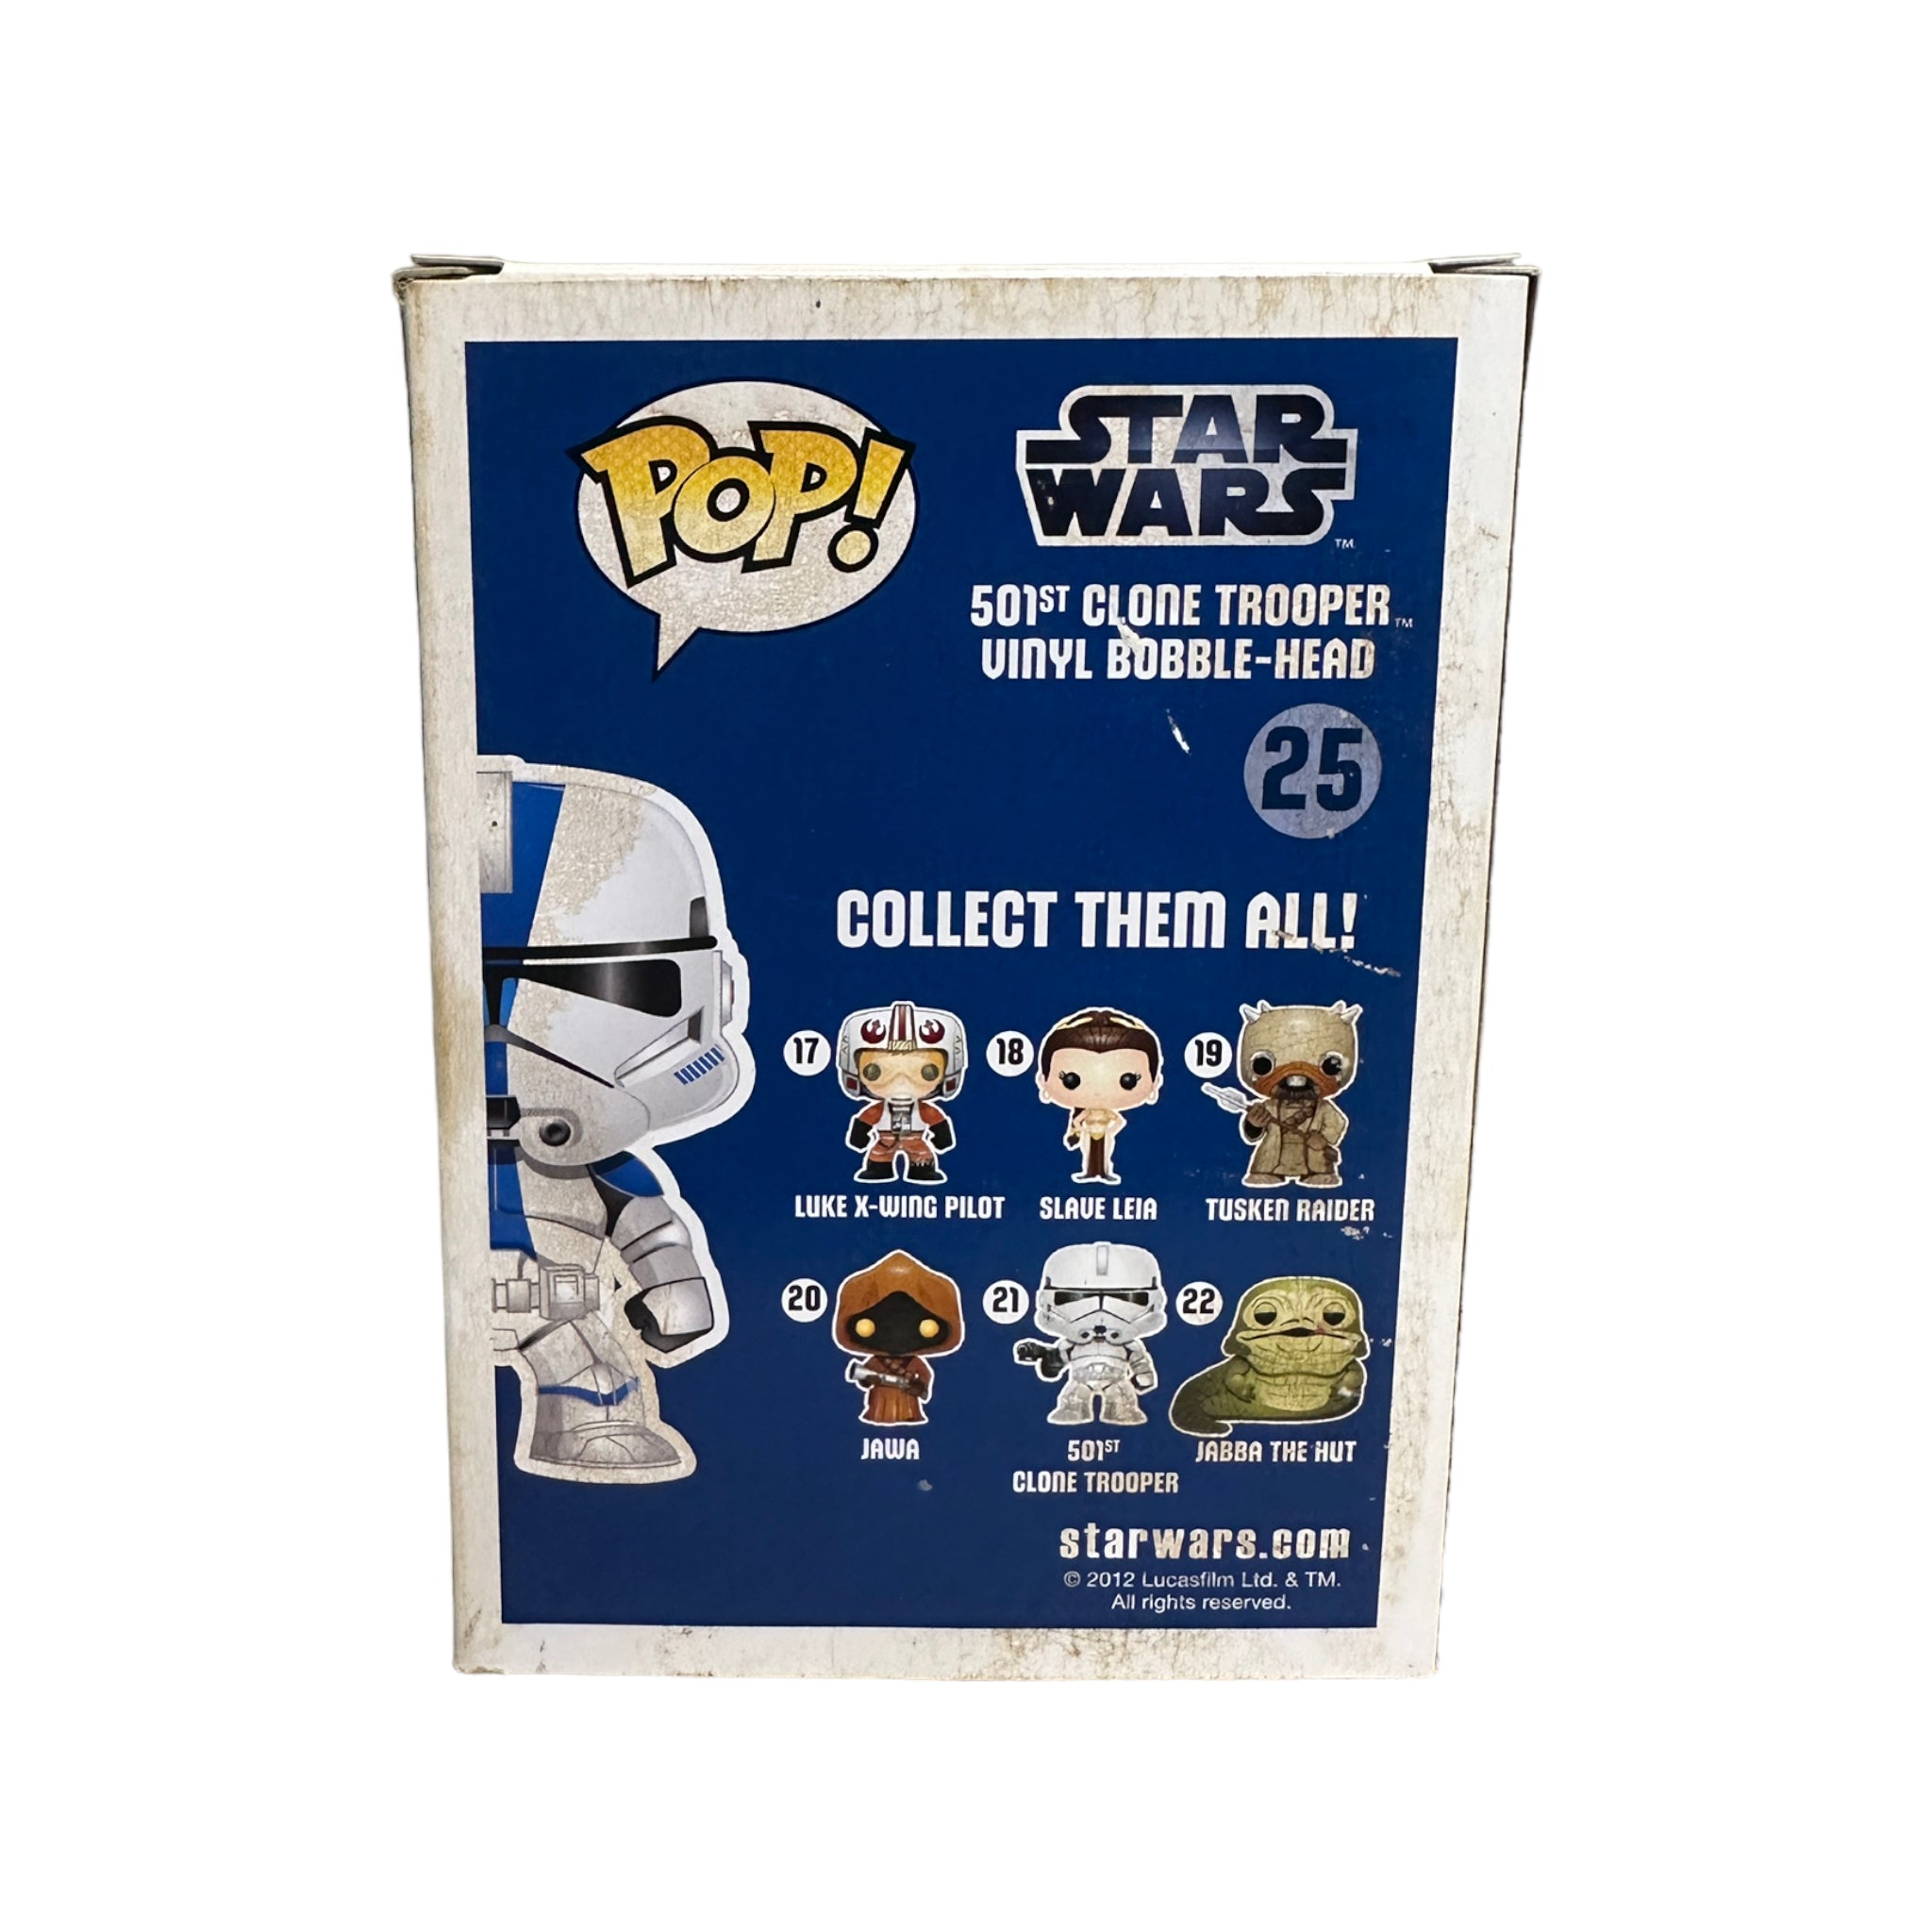 501st Clone Trooper #25 Funko Pop! - Star Wars - SDCC 2012 Exclusive LE480 Pcs - Condition 6/10